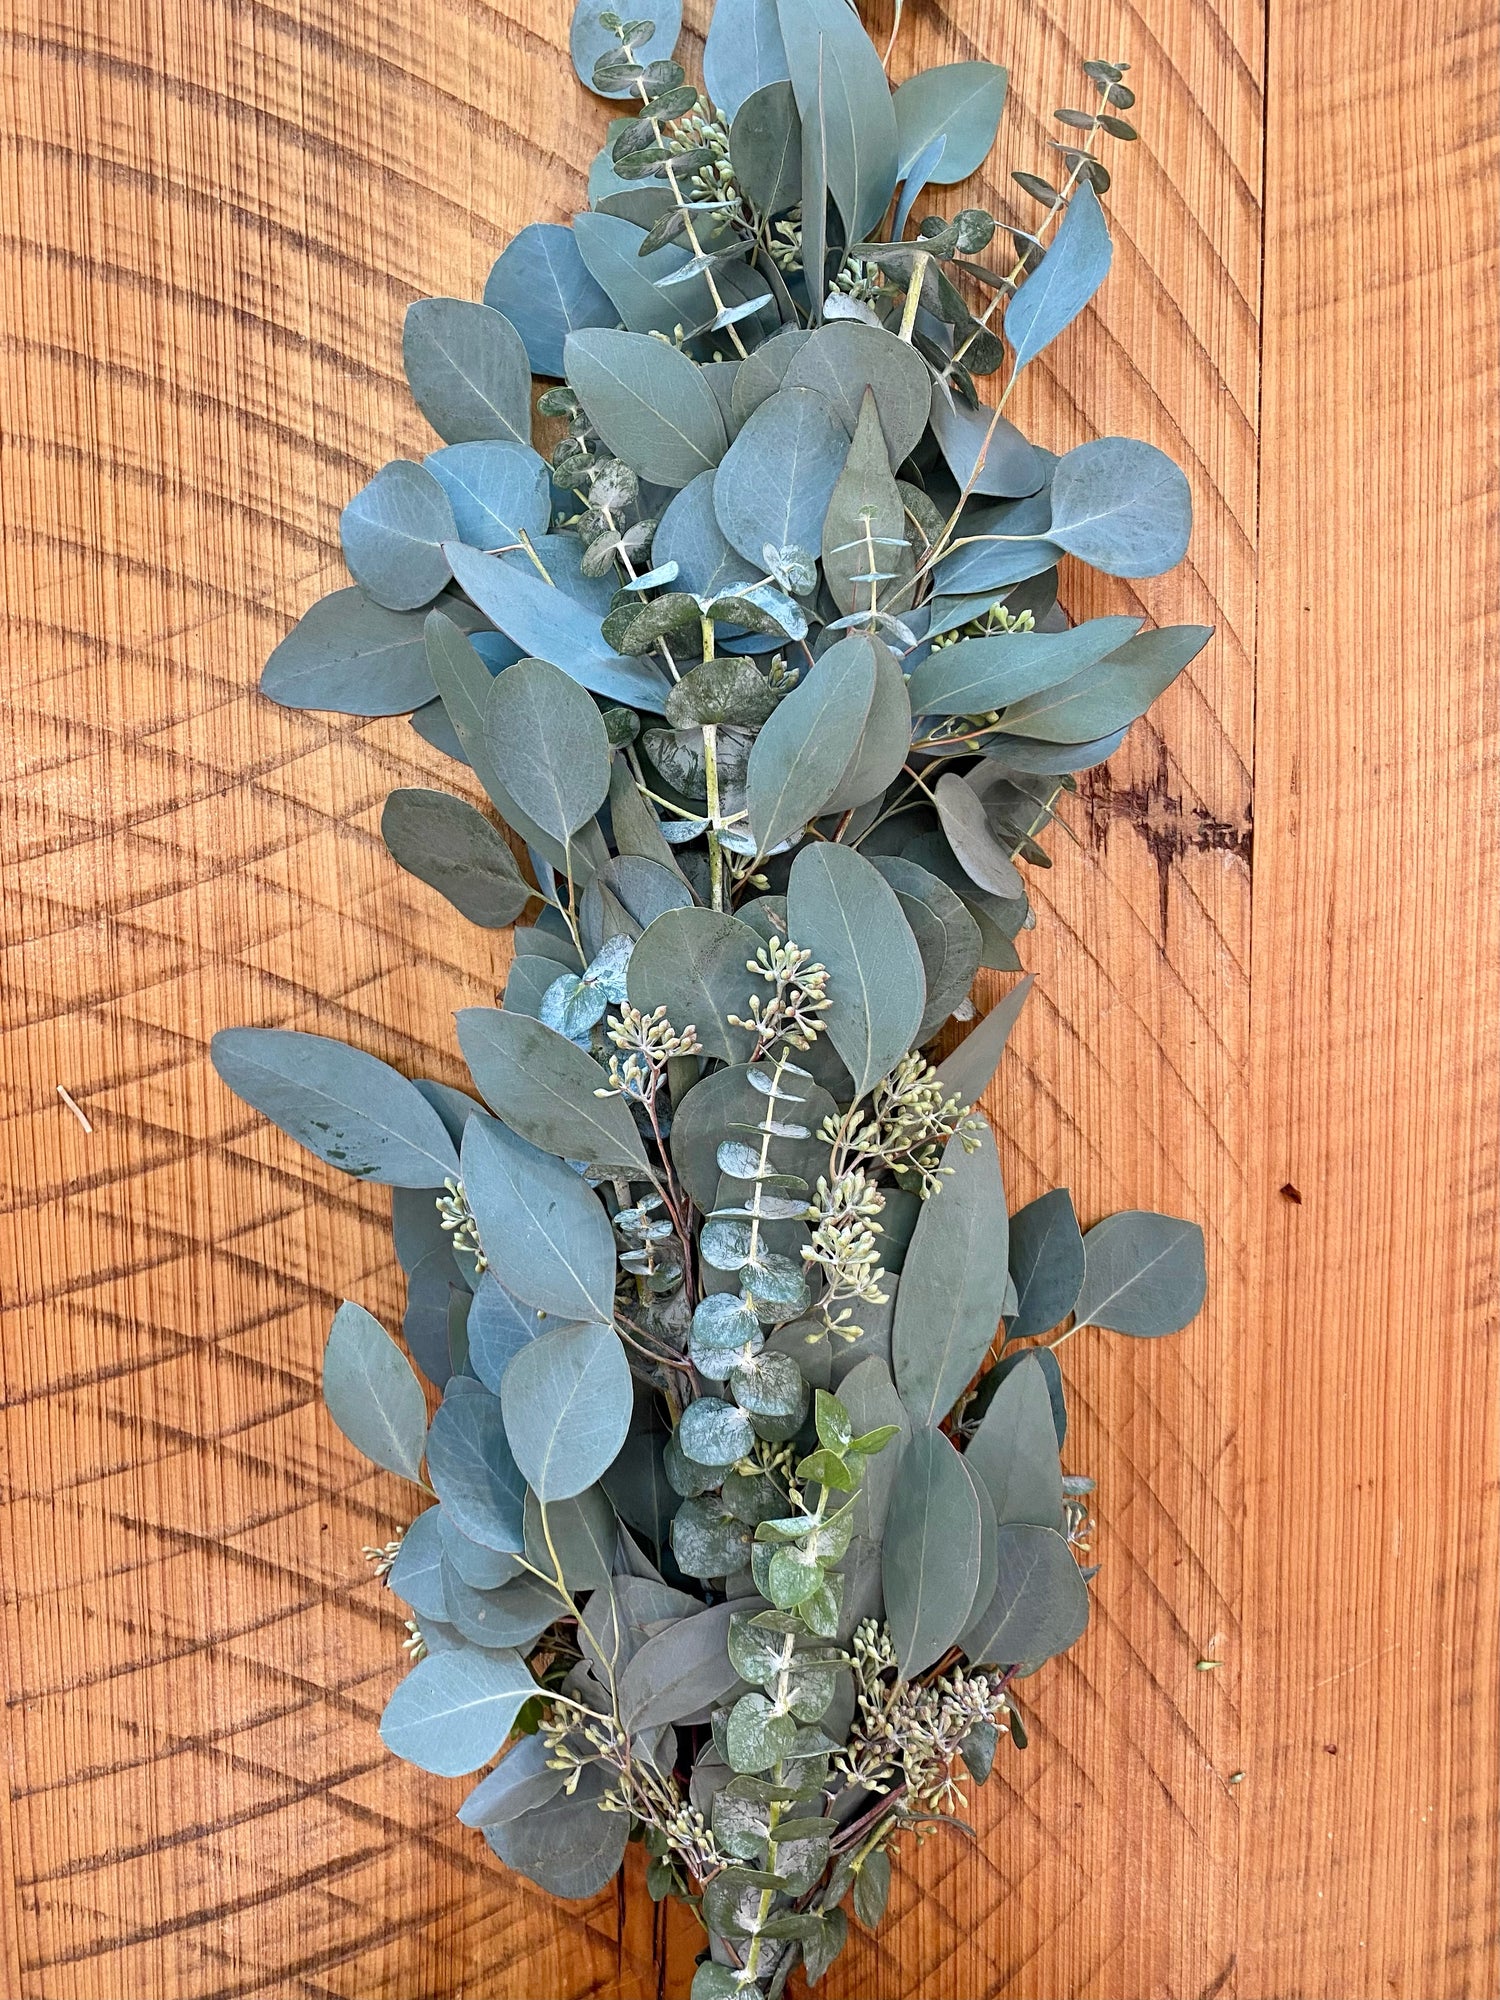 Baby Blue, Silver Dollar, and Seeded Eucalyptus